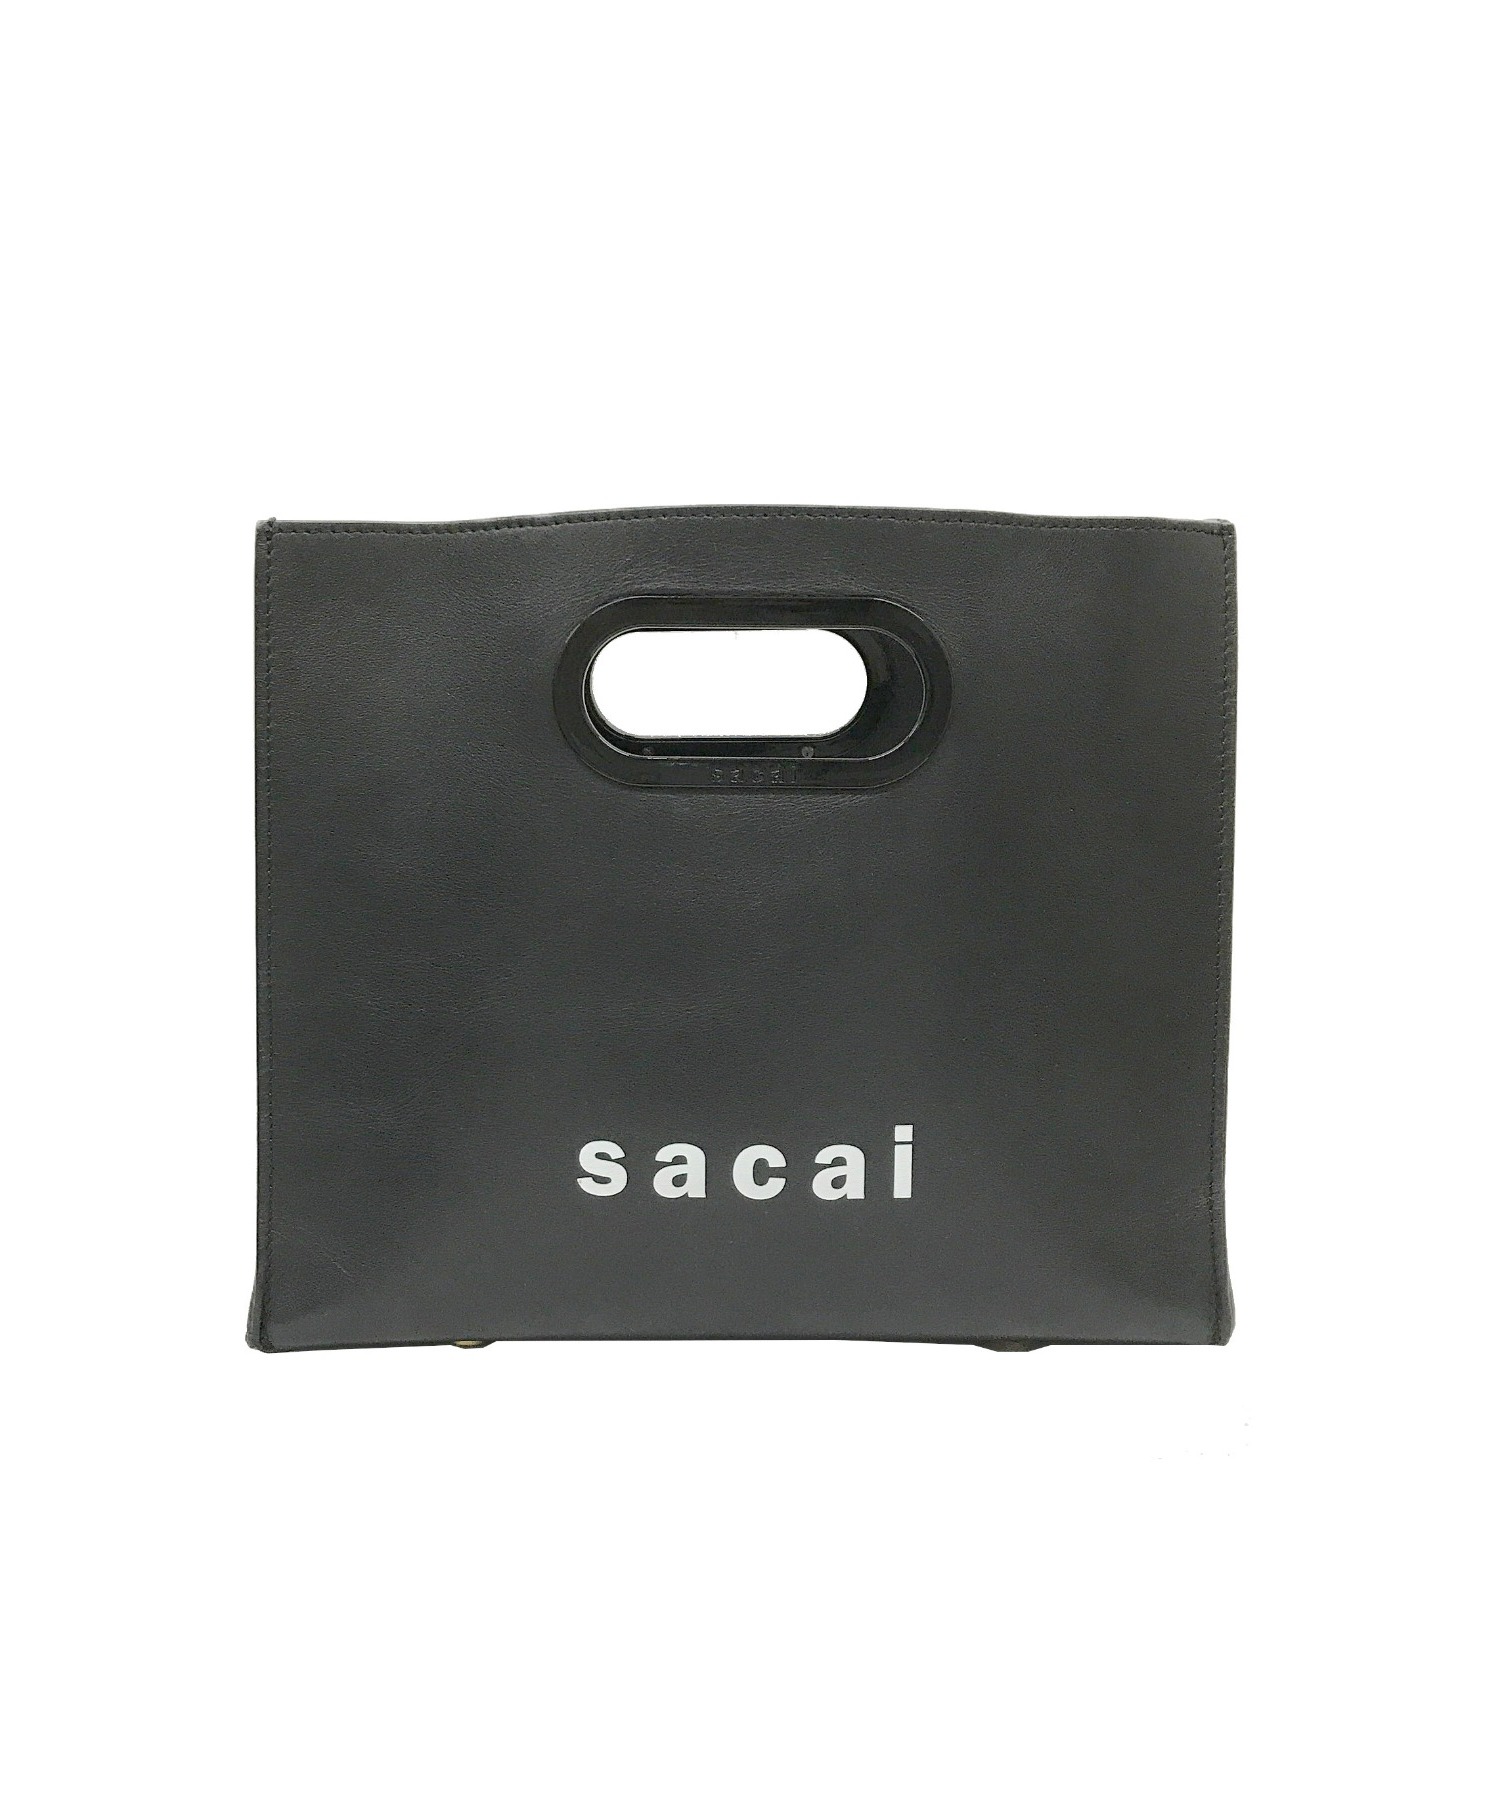 sacai (サカイ) ロゴハンドバッグ ブラック サイズ:下記参照 Logo Hand Bag